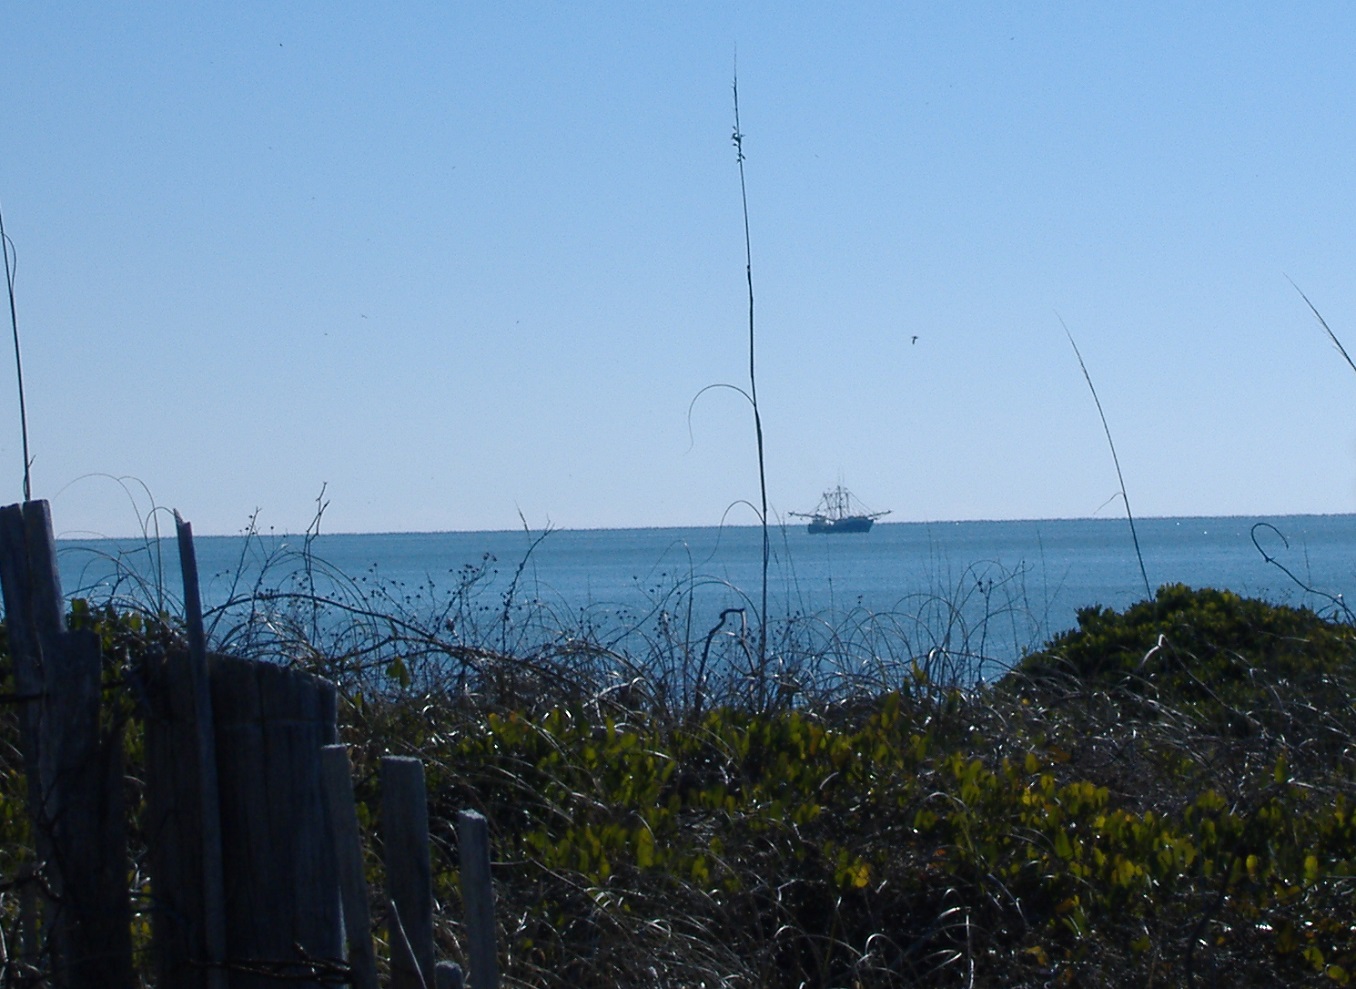 Oak Island NC photo fishing boat on the ocean